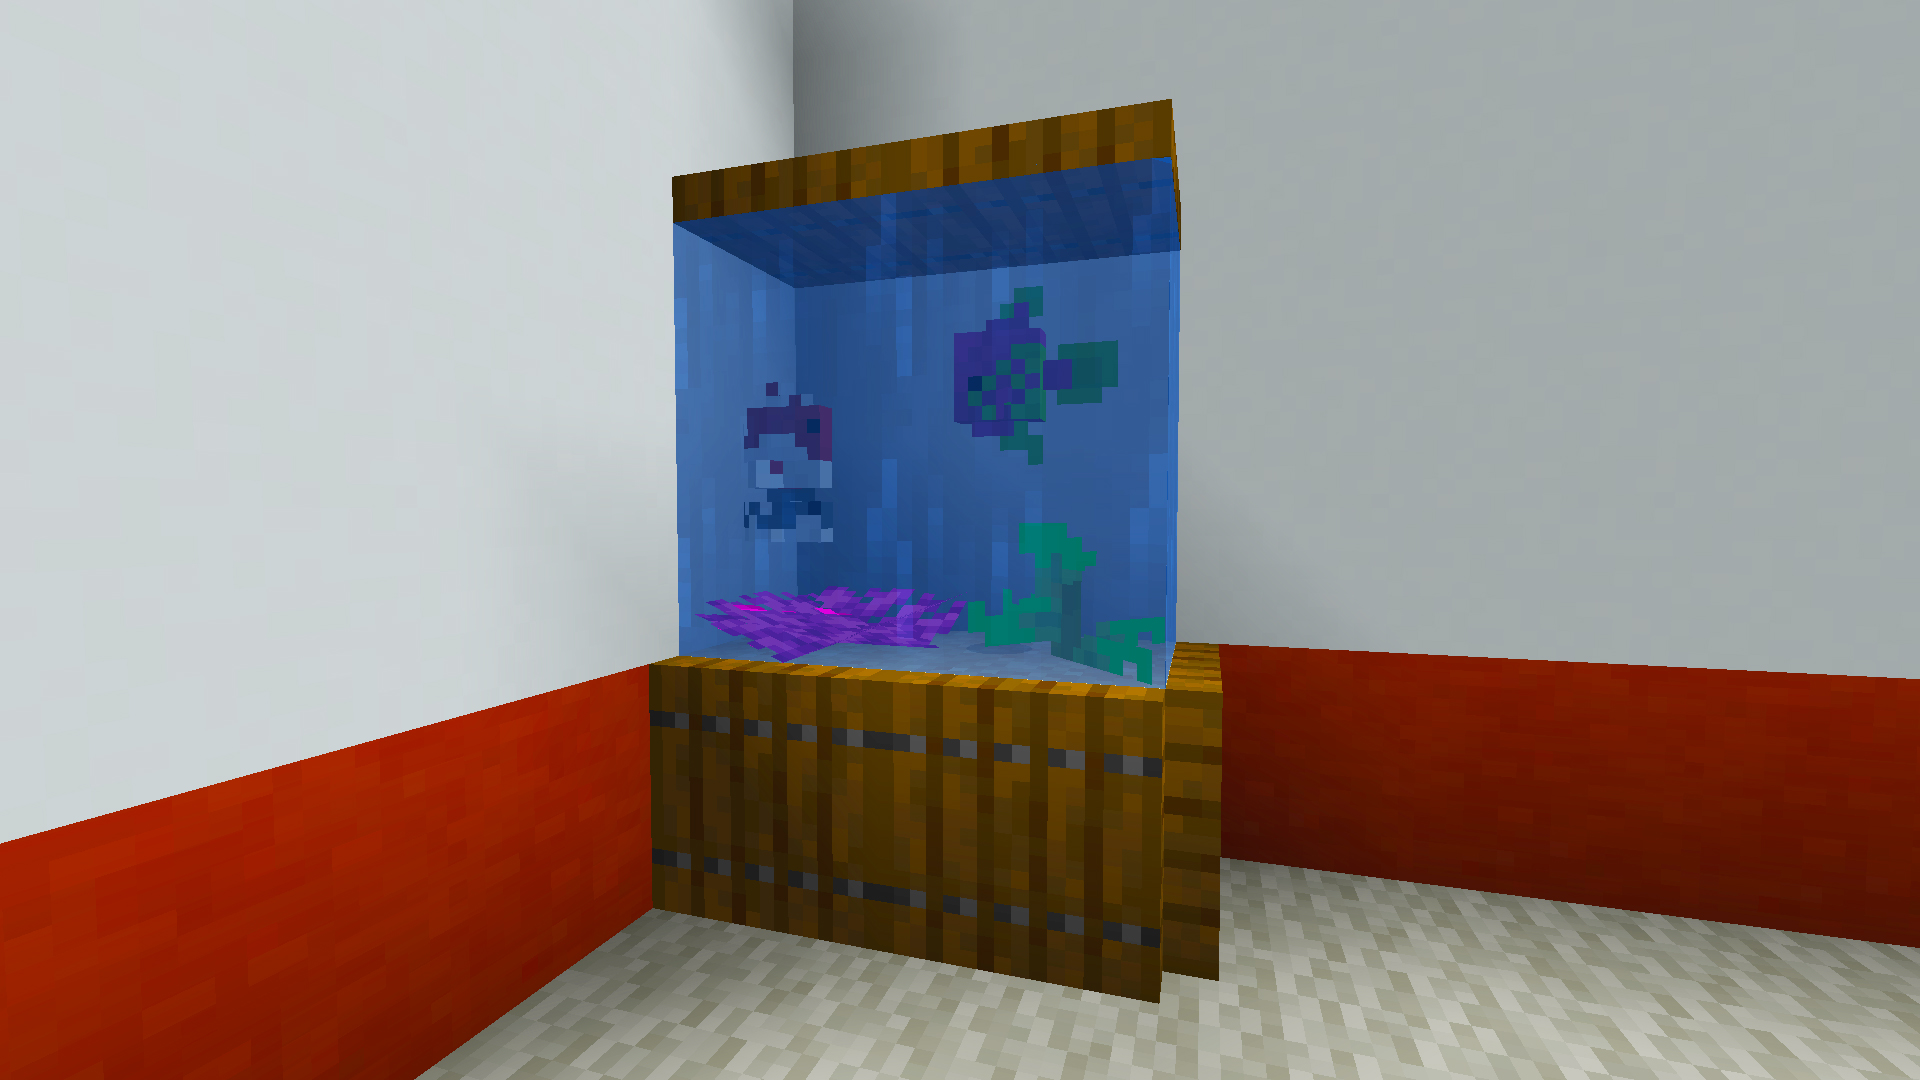 minecraft pe fish tank